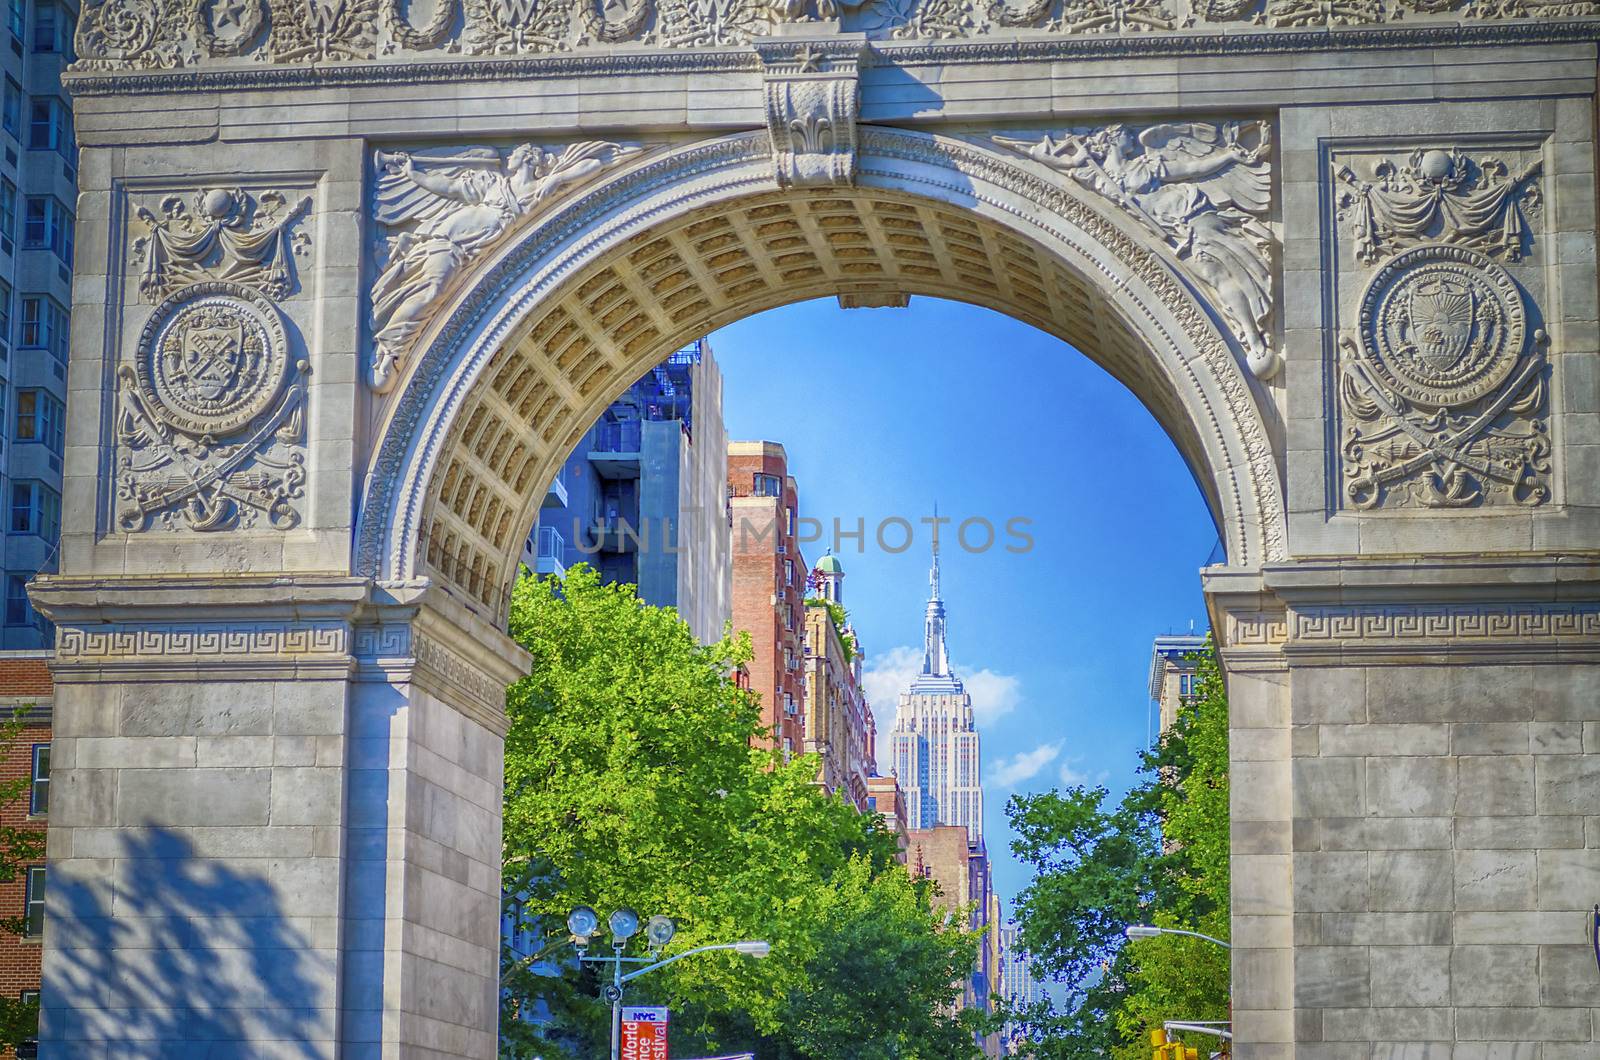 Washington Square Arch and the Empire State Building in the dist by marcorubino